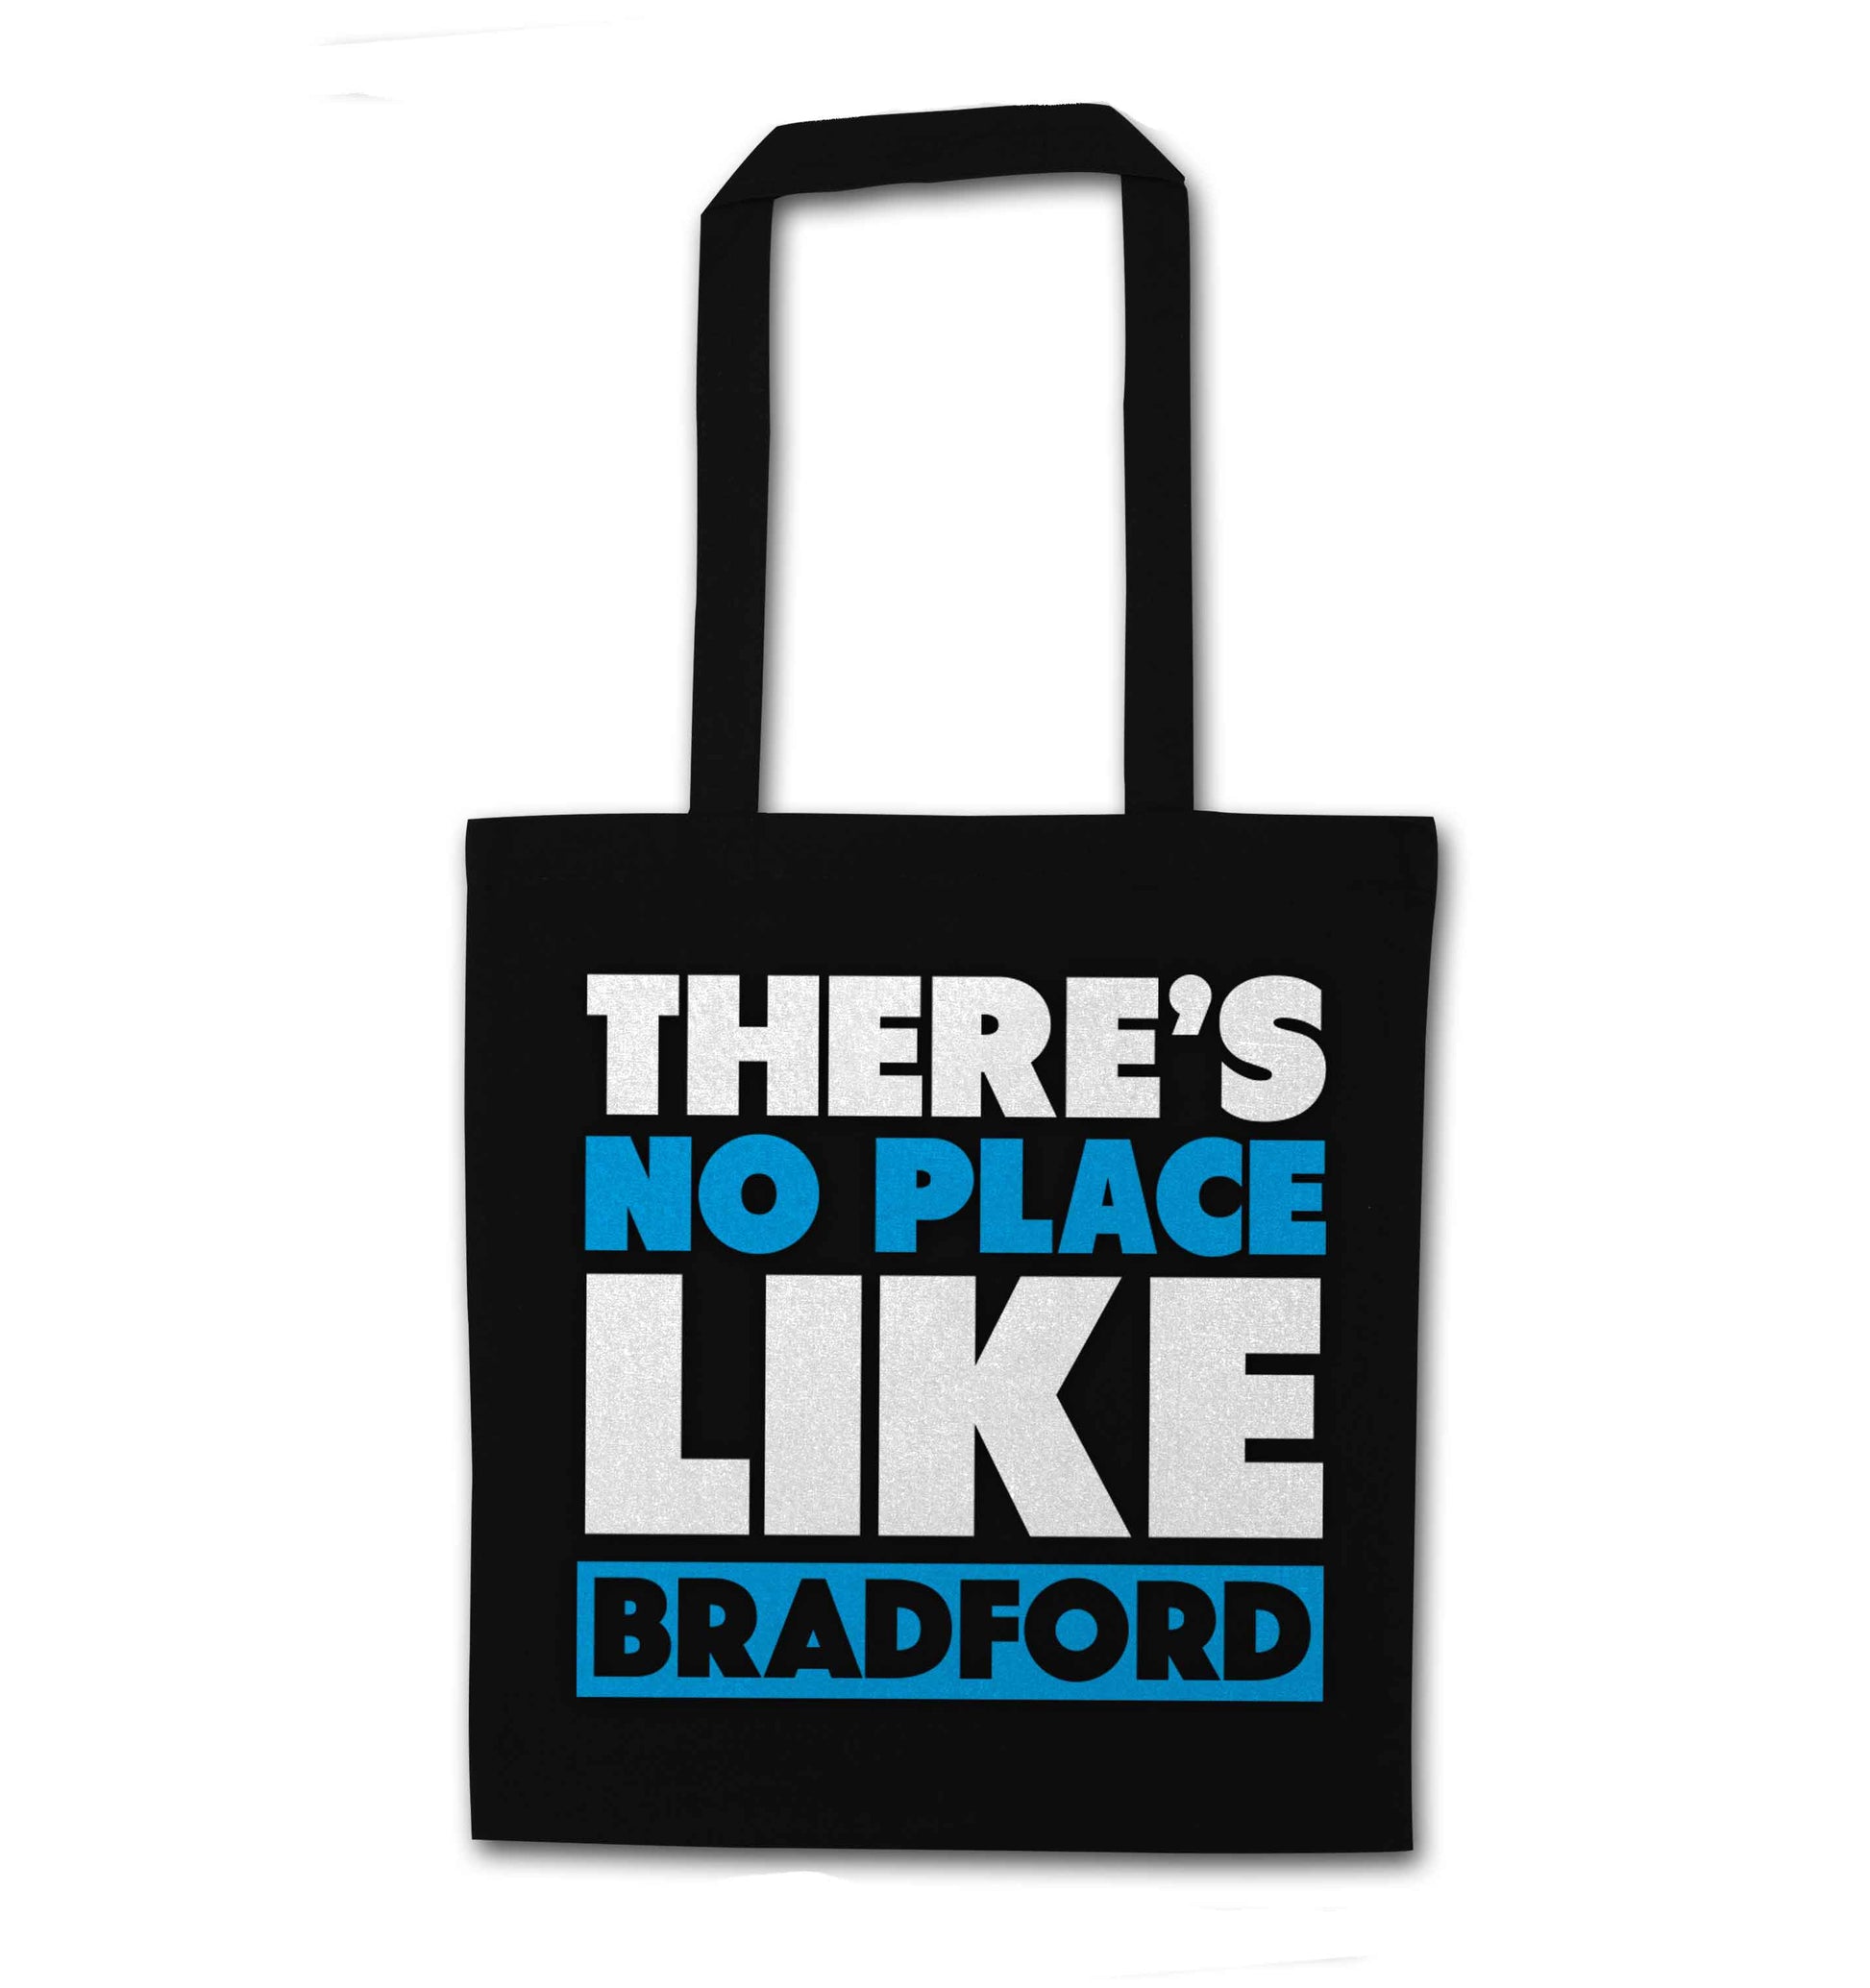 There's no place like Bradford black tote bag